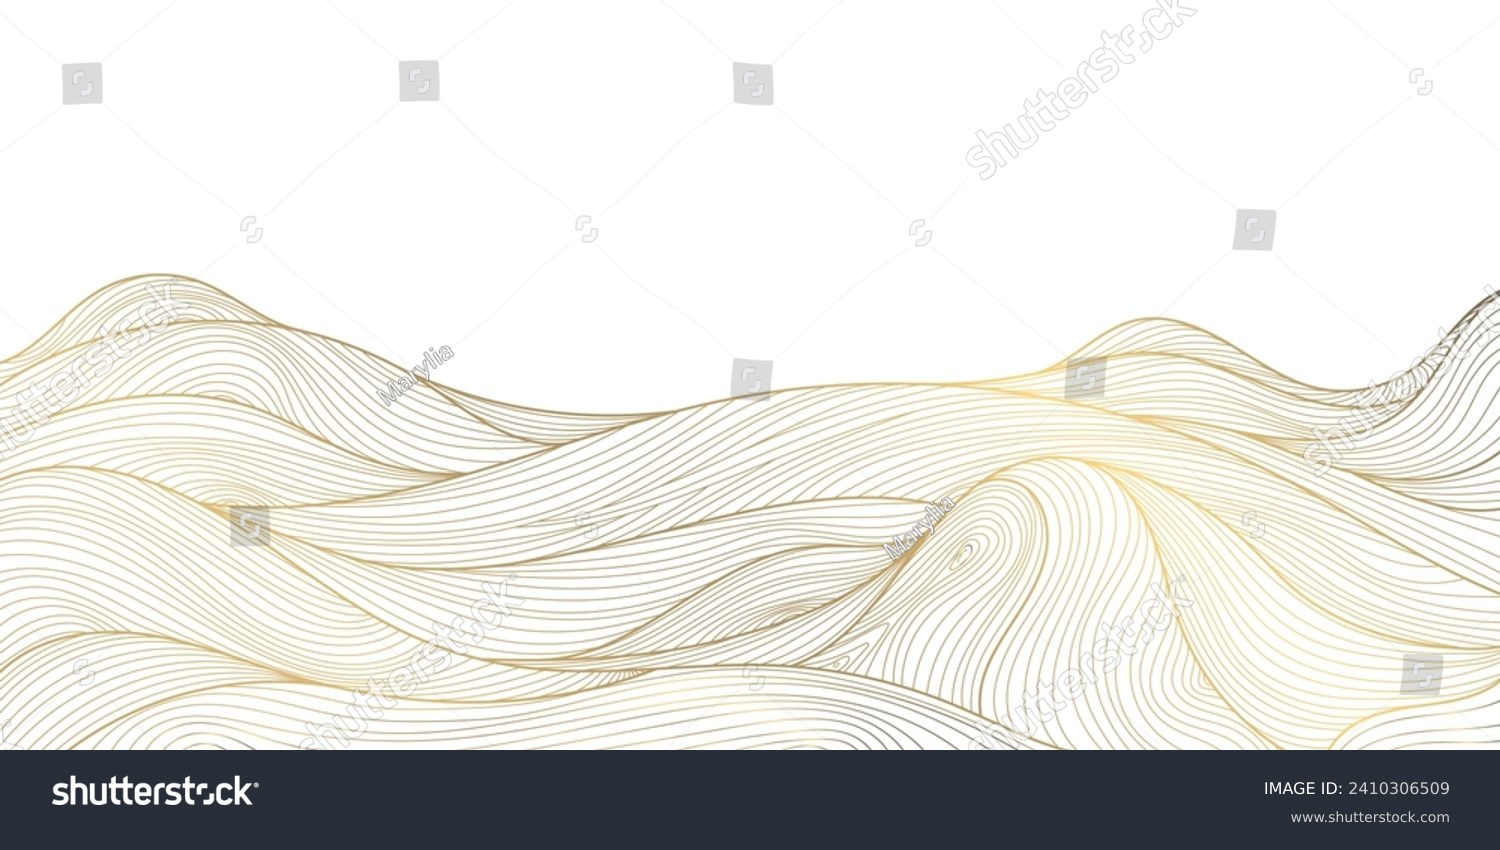 SVG of Vector line japanese art, mountains background, landscape dessert texture, wave pattern illustration. Golden minimalist drawing svg